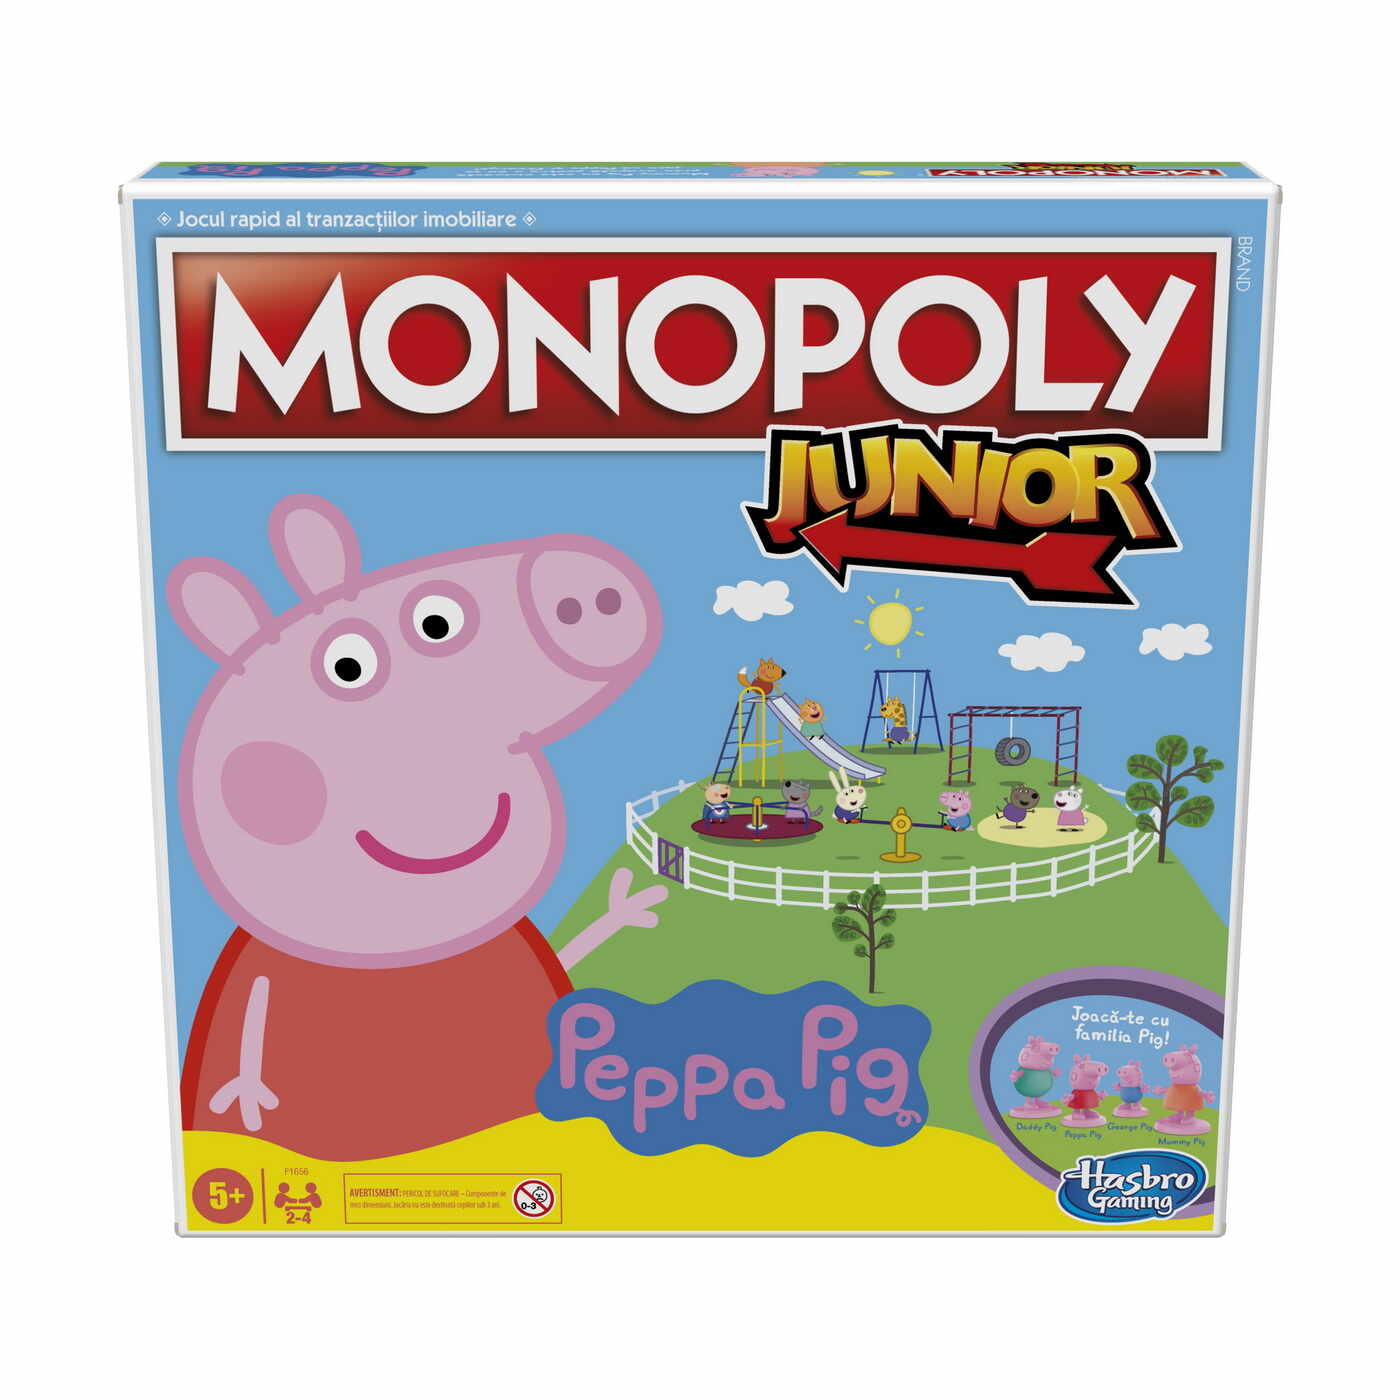 Monopoly Junior - Peppa Pig | Hasbro